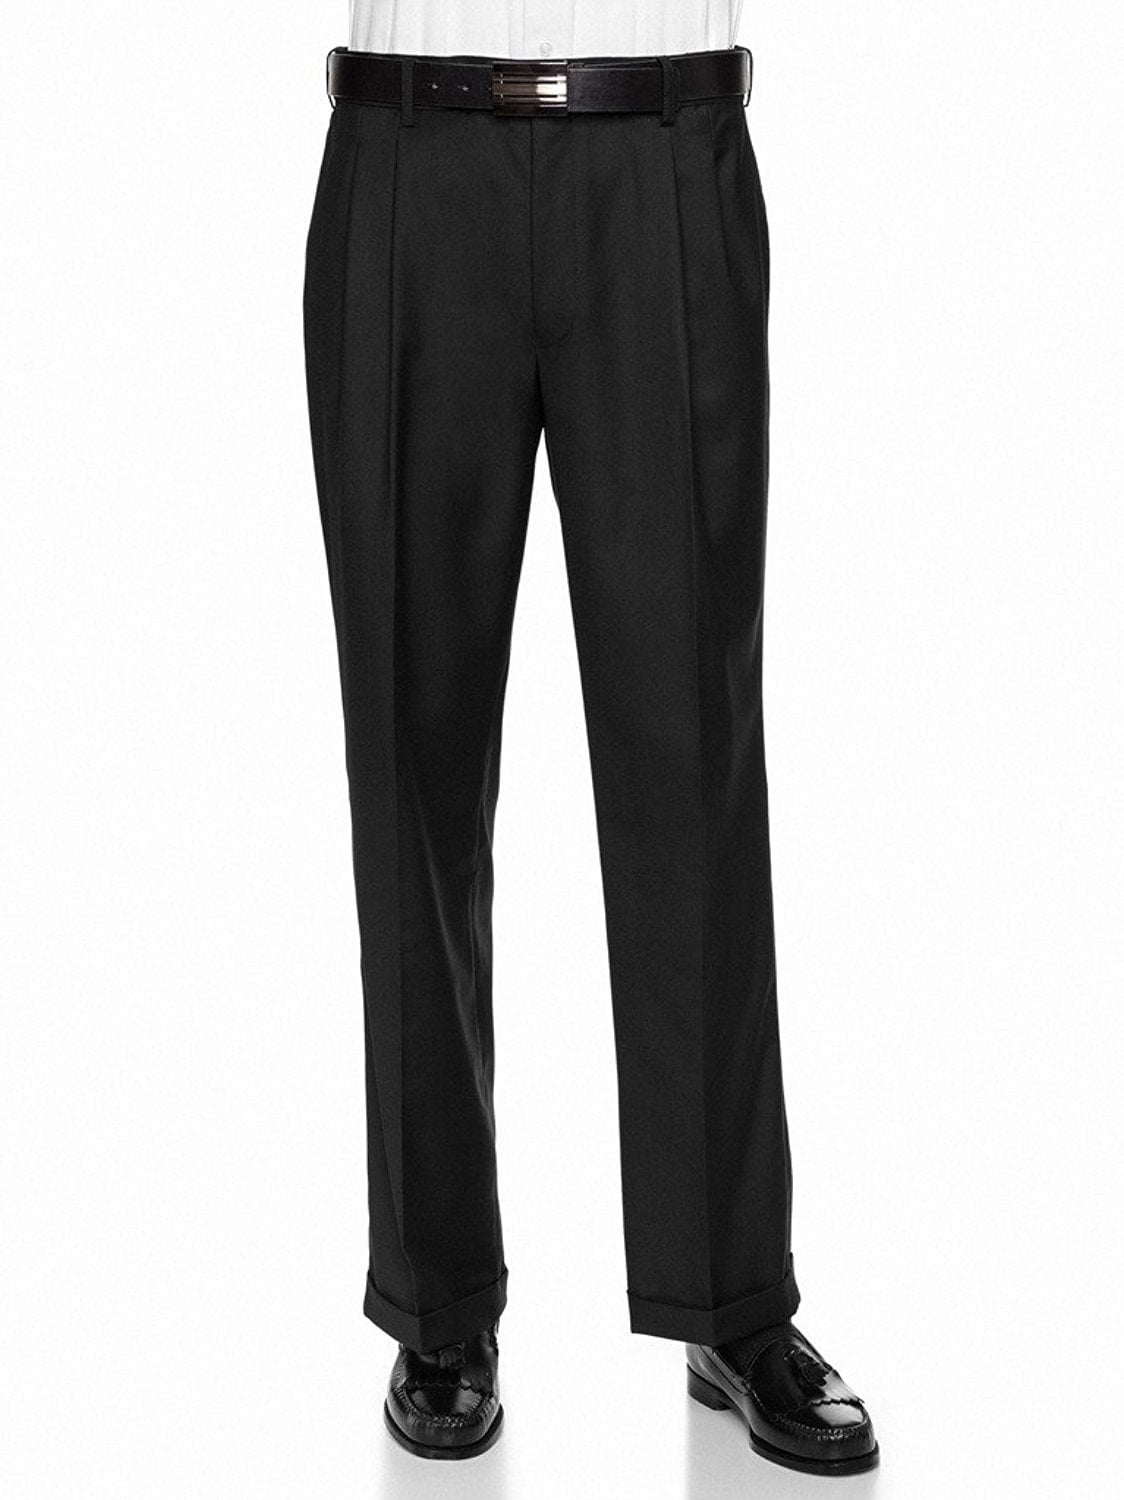 Mens Pants Black Dress Cuffed Pleated 32 34 36  X 32 Style #1 NEW  USA 